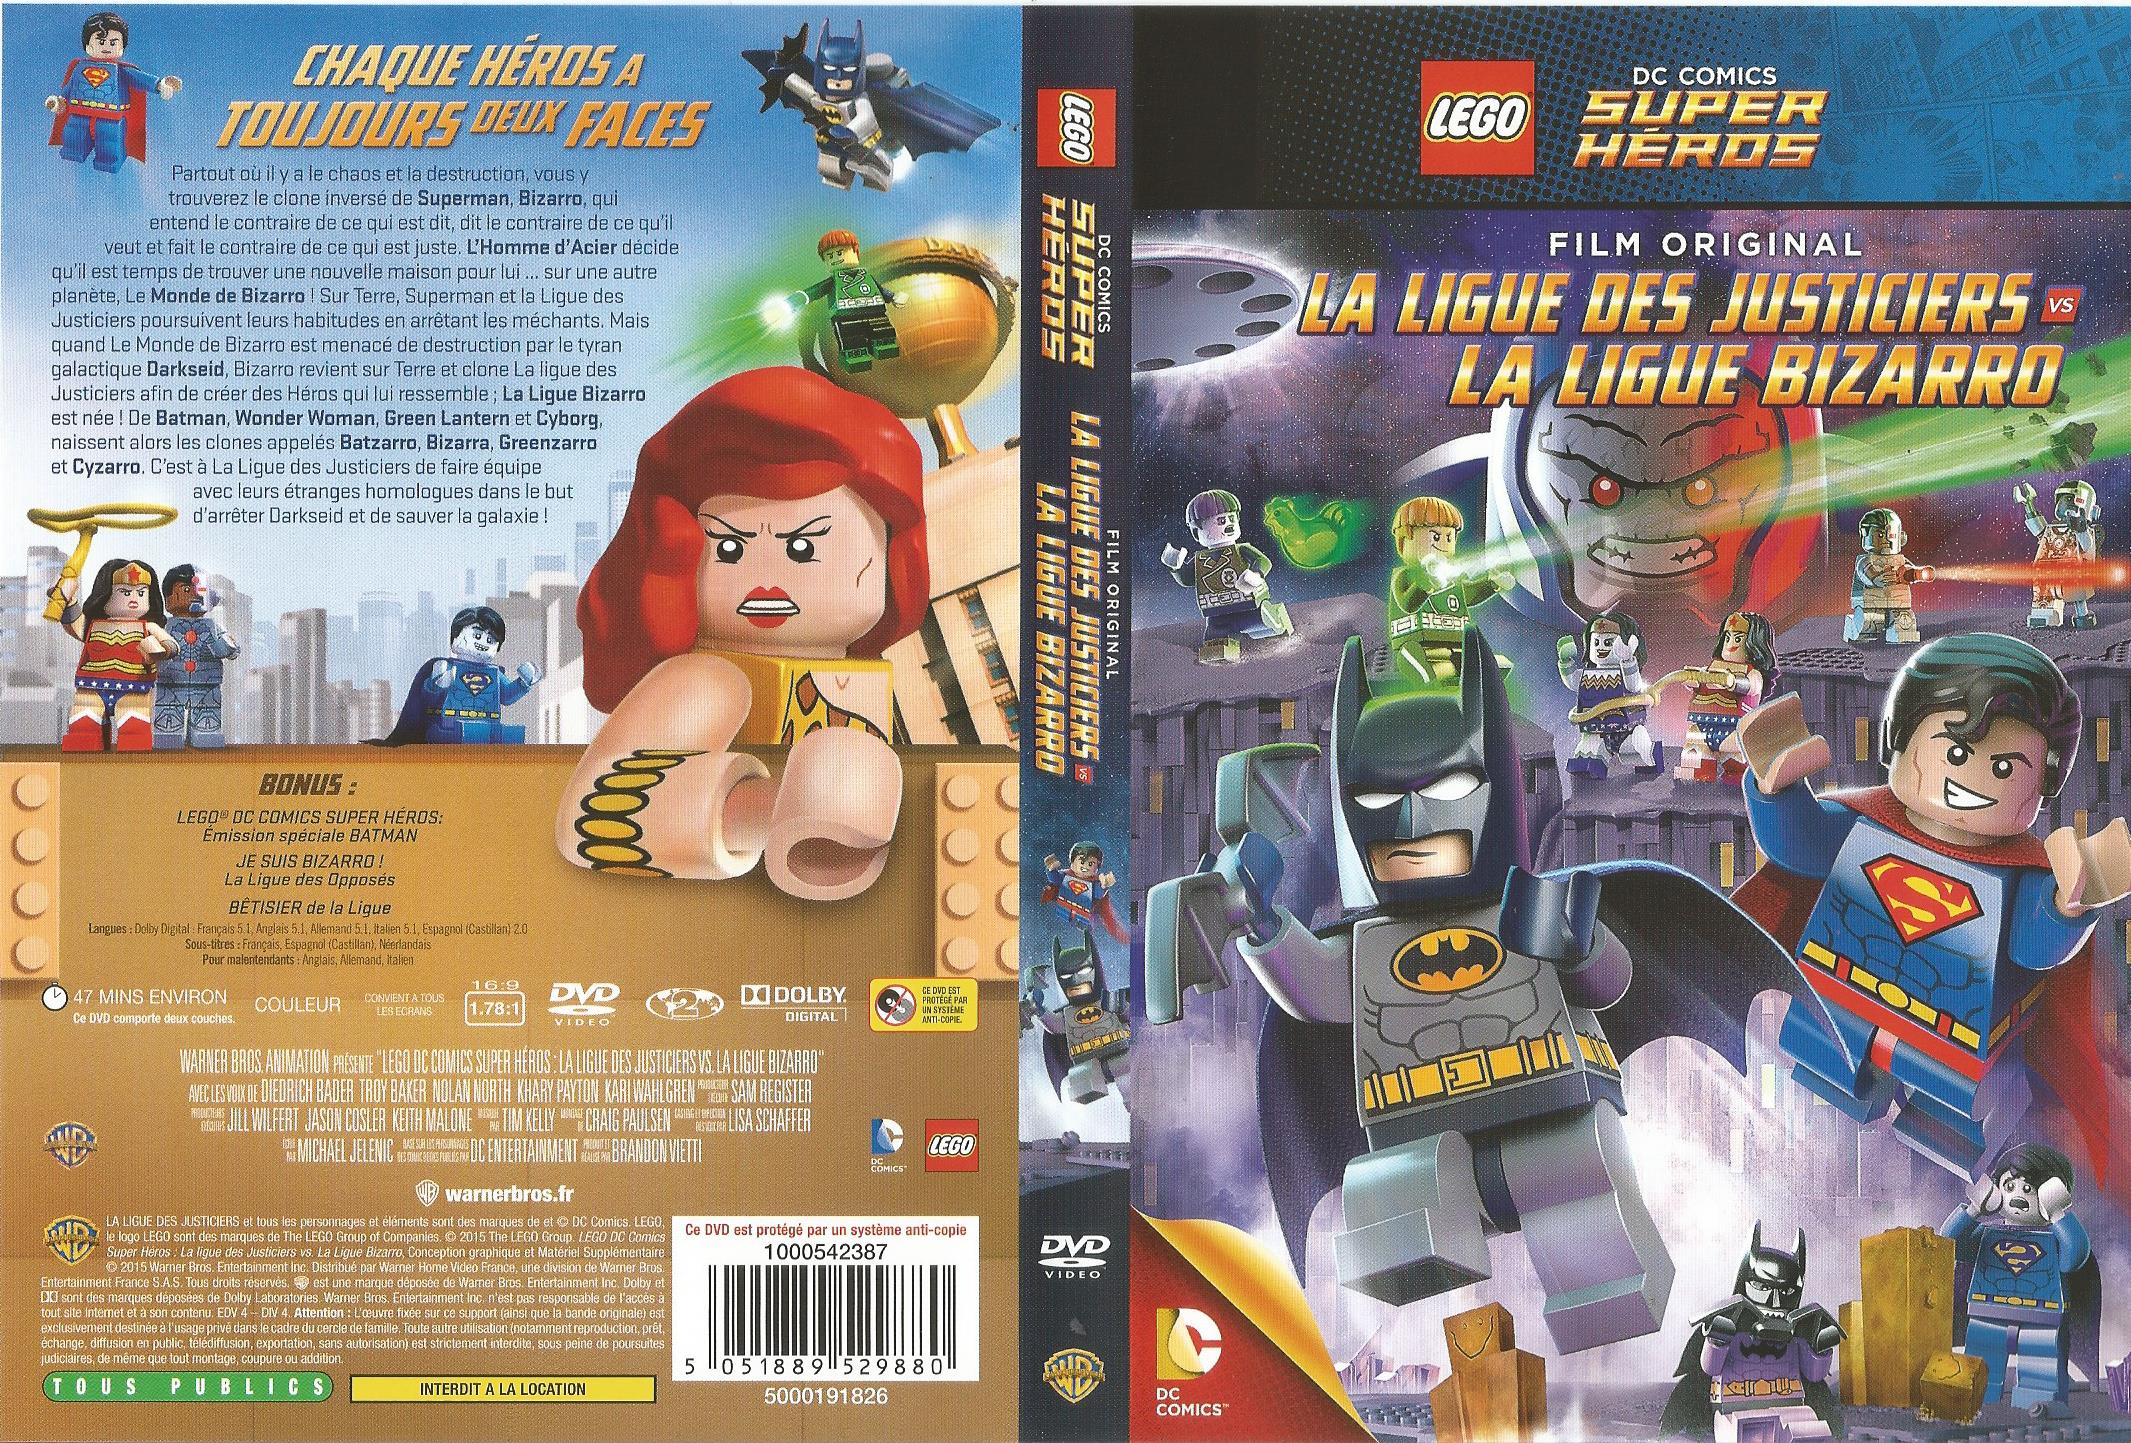 Jaquette DVD Lego la ligue des justiciers vs la ligue Bizarro